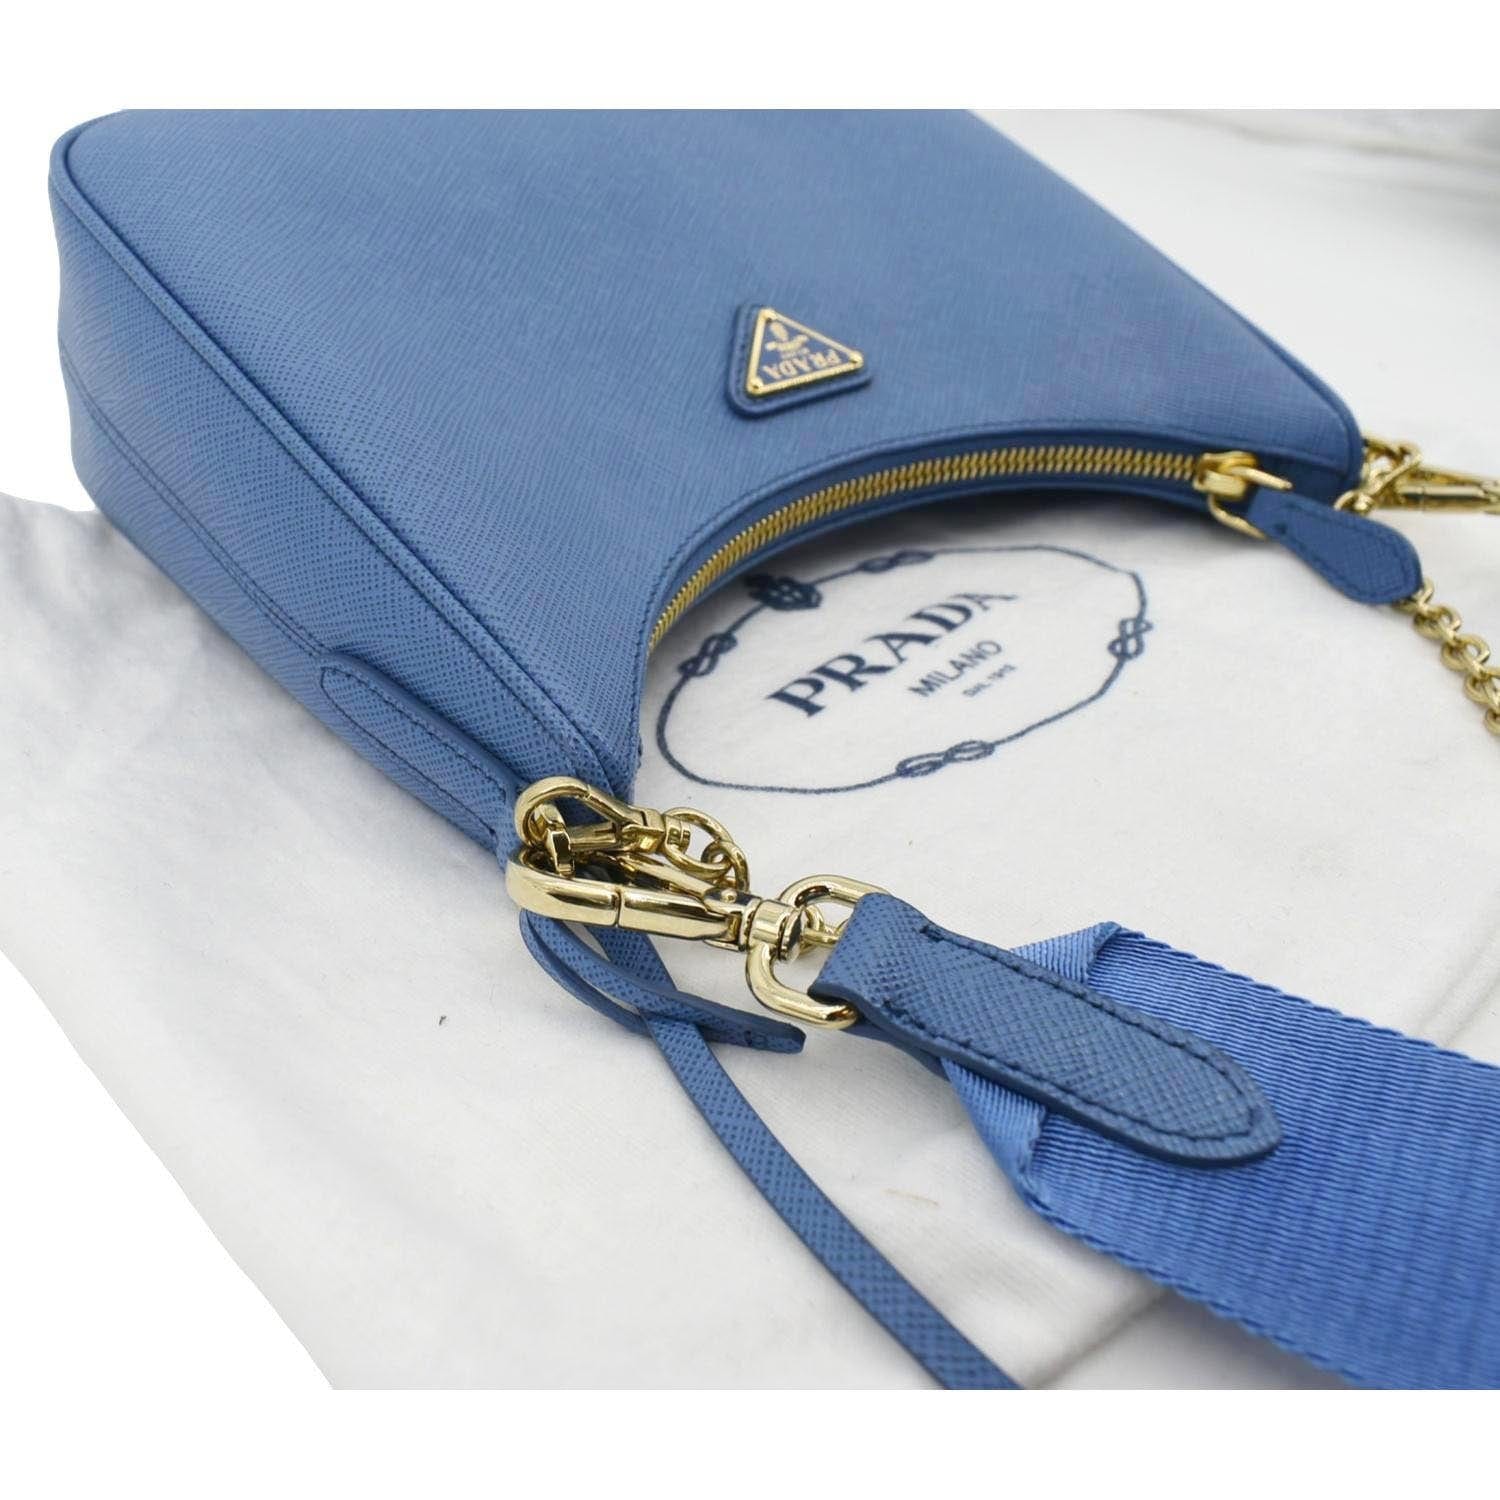 Prada Re-edition 2005 Saffiano Leather Bag In Pale Blue